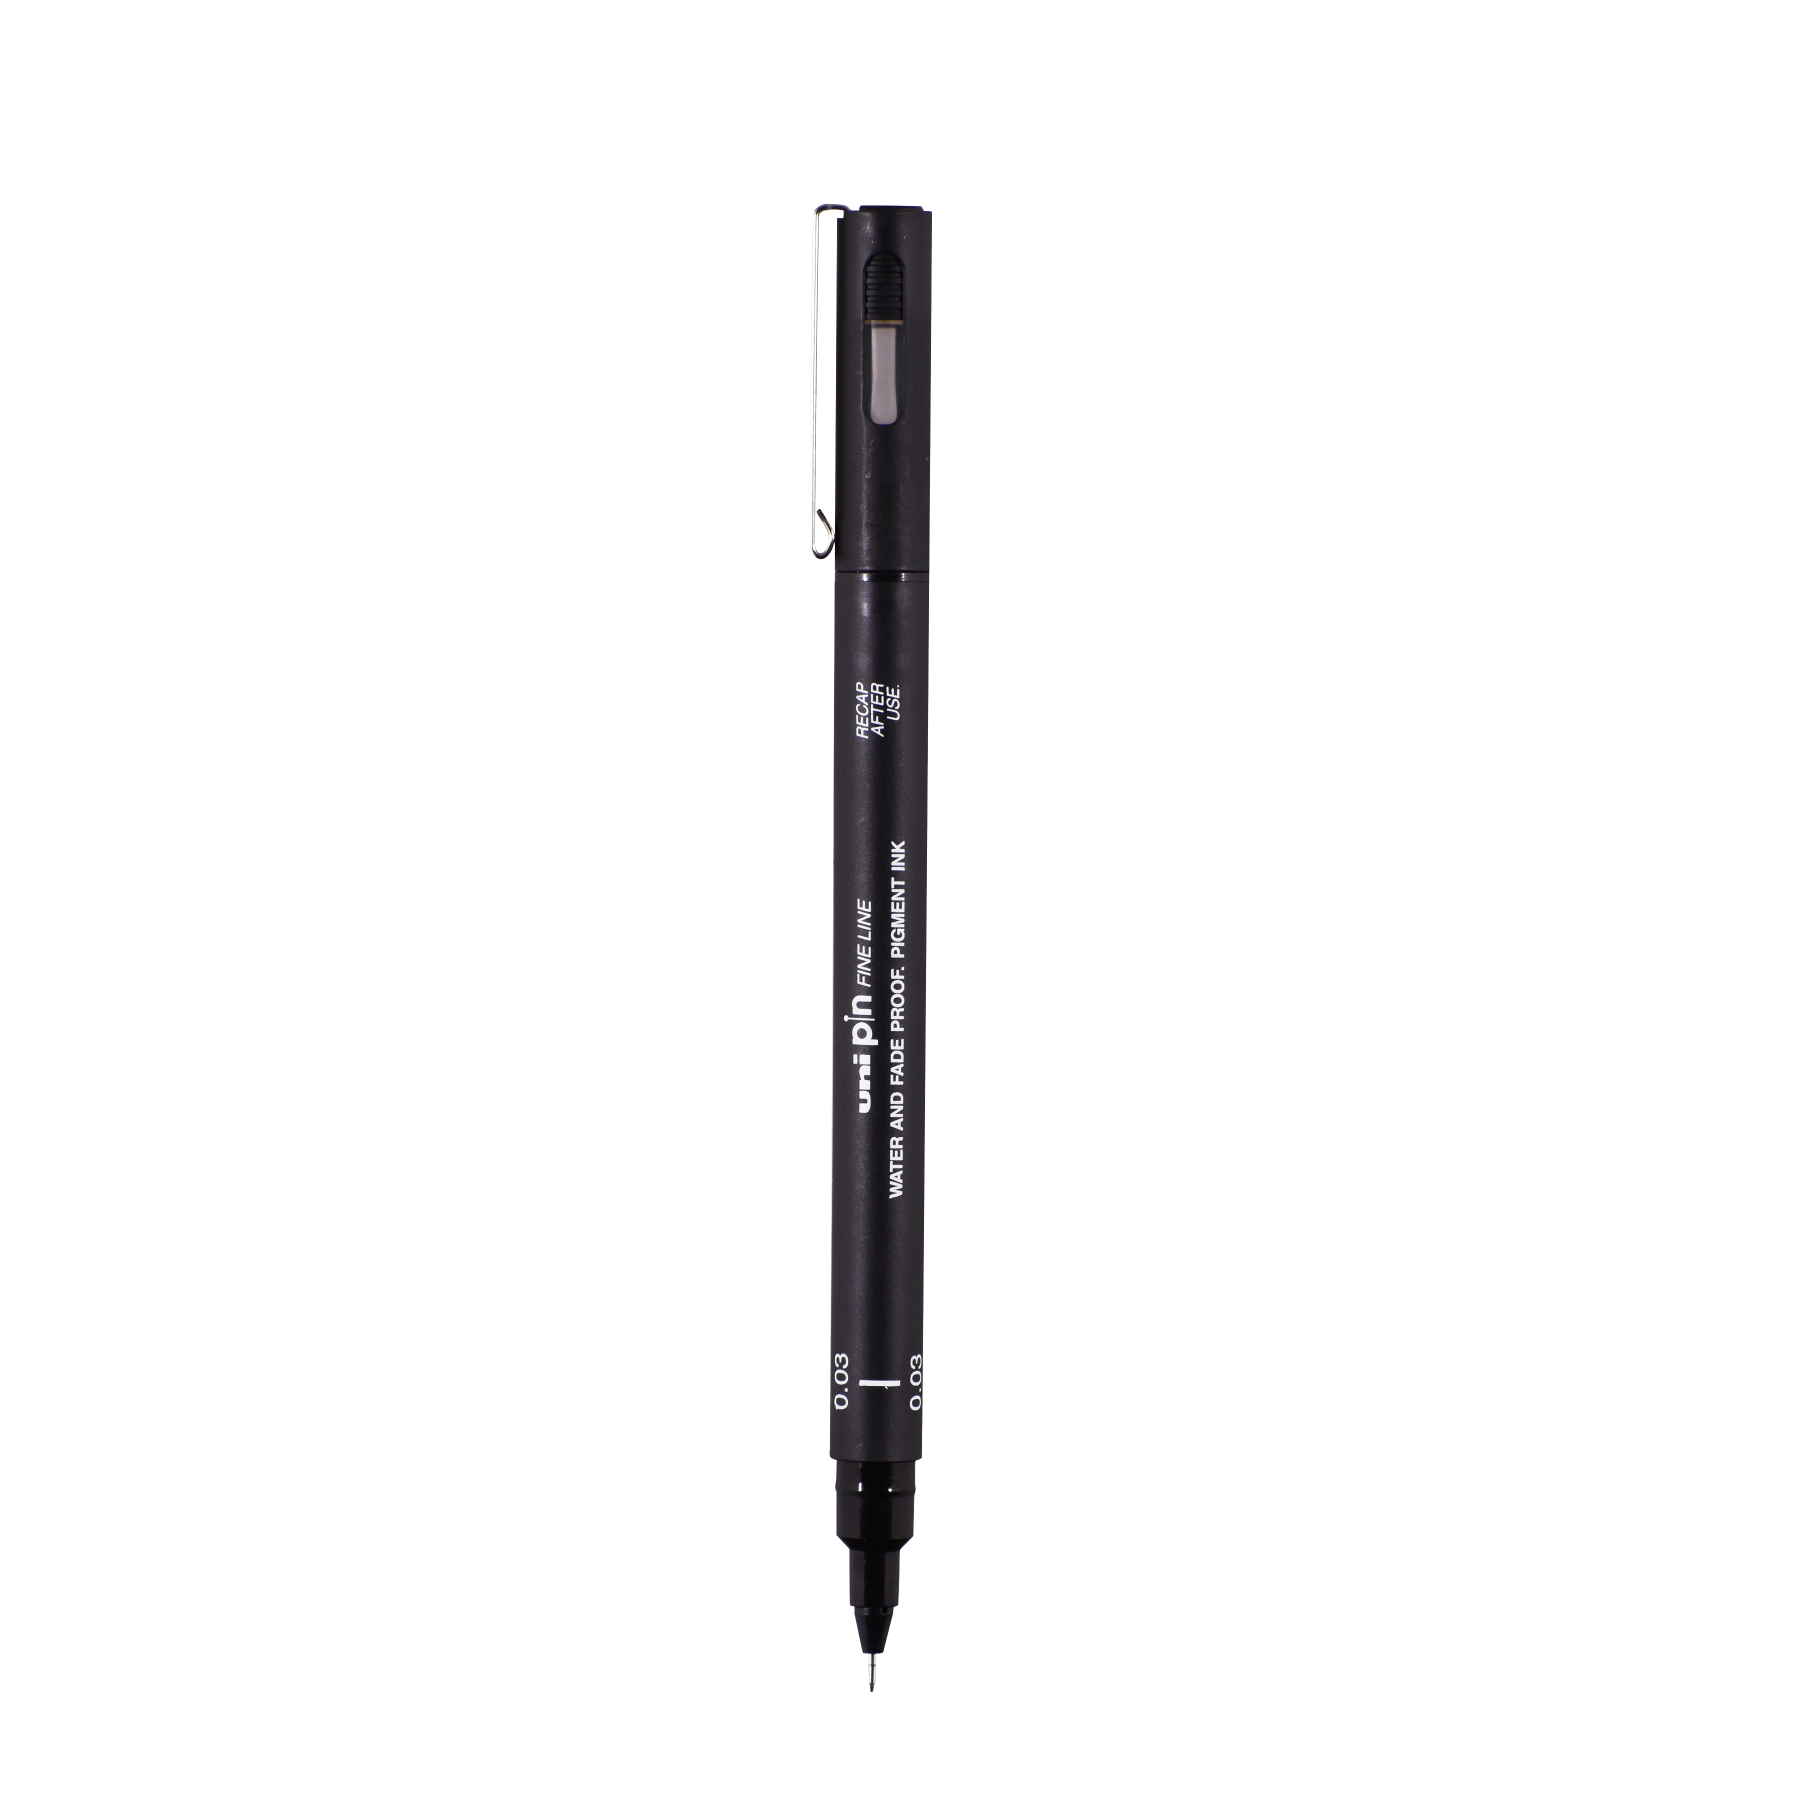 uni® Pin, Fineliner Drawing Pen (0.03mm)